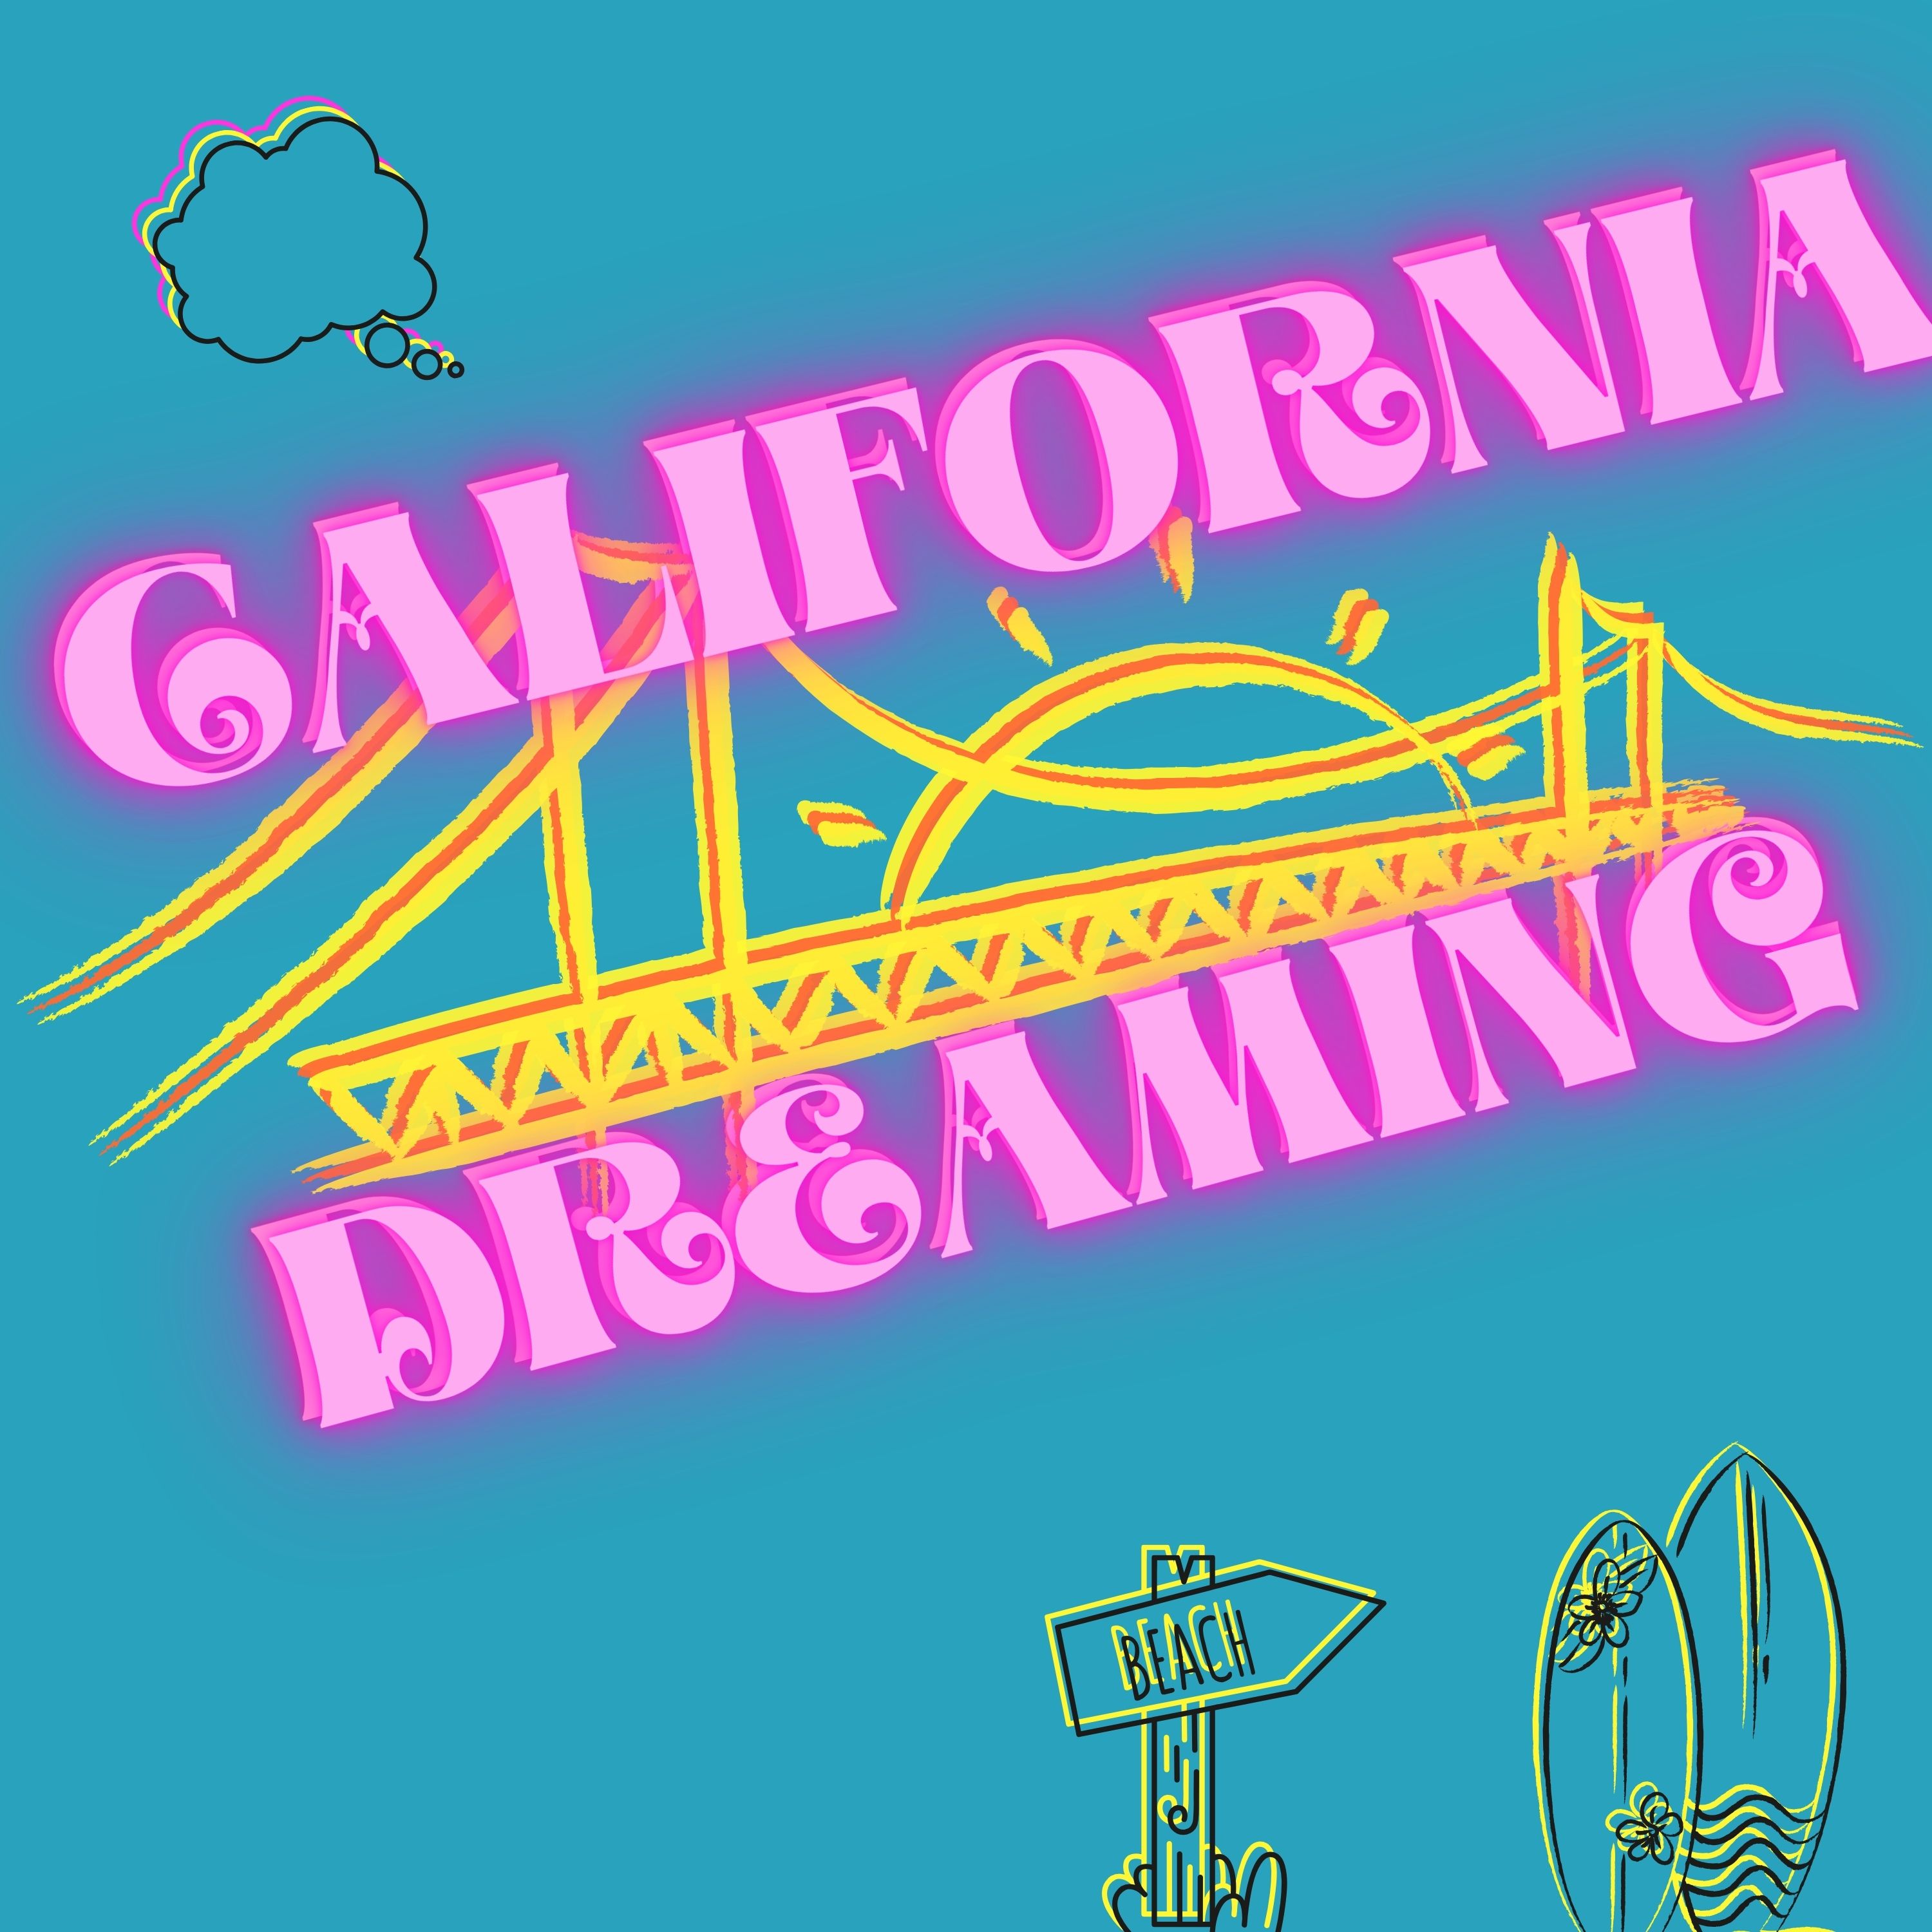 Artwork for California Dreaming